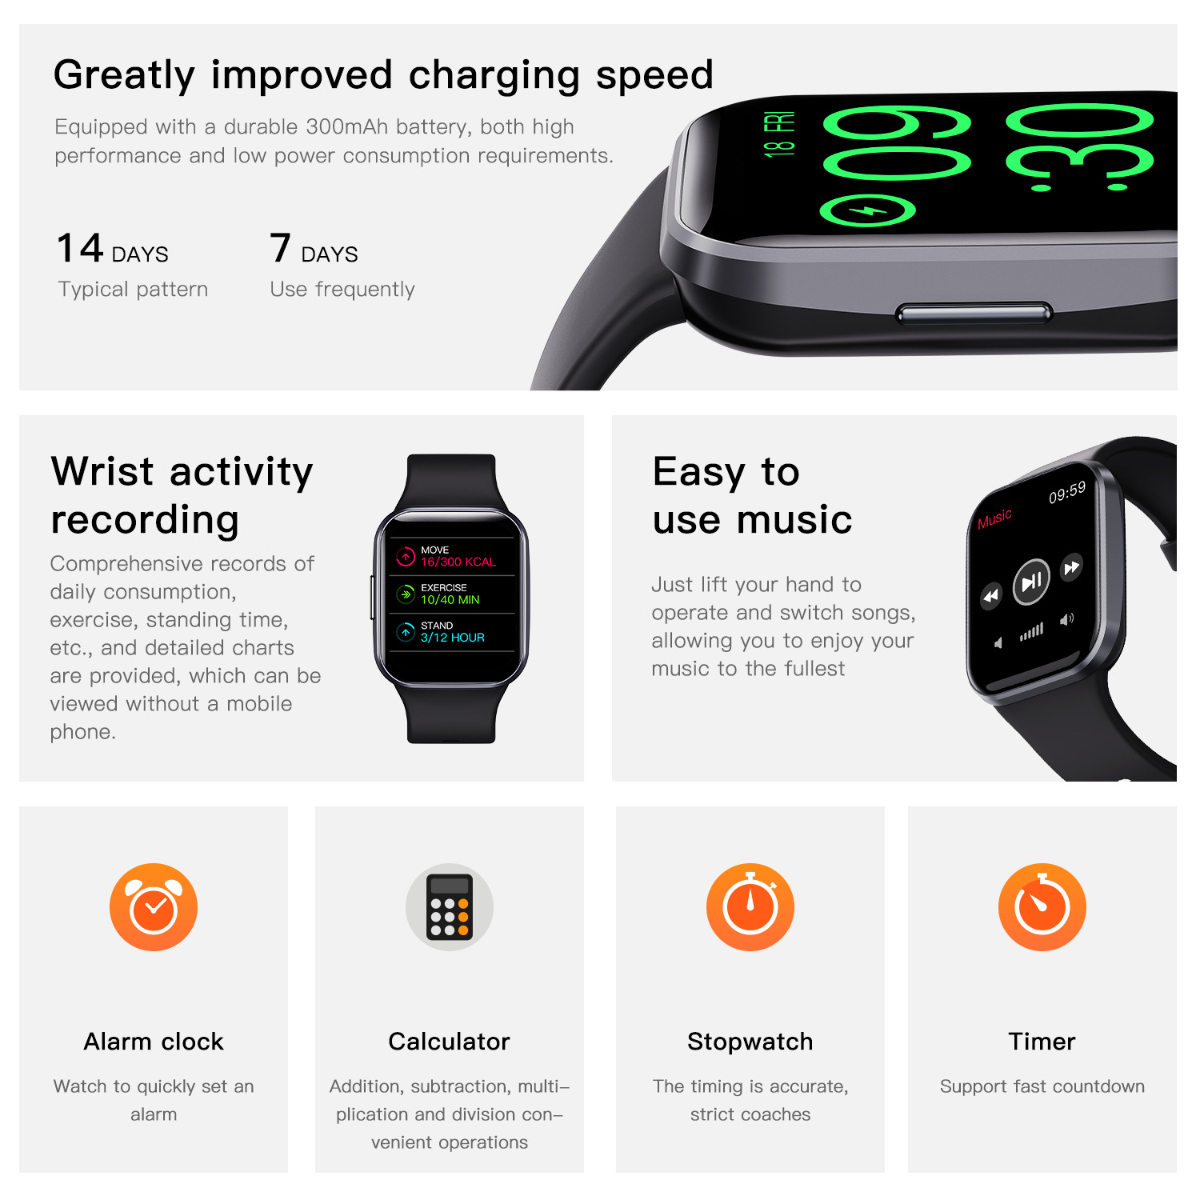 Silikon, Silikon Sportuhr Schrittzähler Smartwatch Lila lila ENBAOXIN Smart-Armband Blut-Sauerstoff-Herzfrequenz-Blutdruck-Überwachung